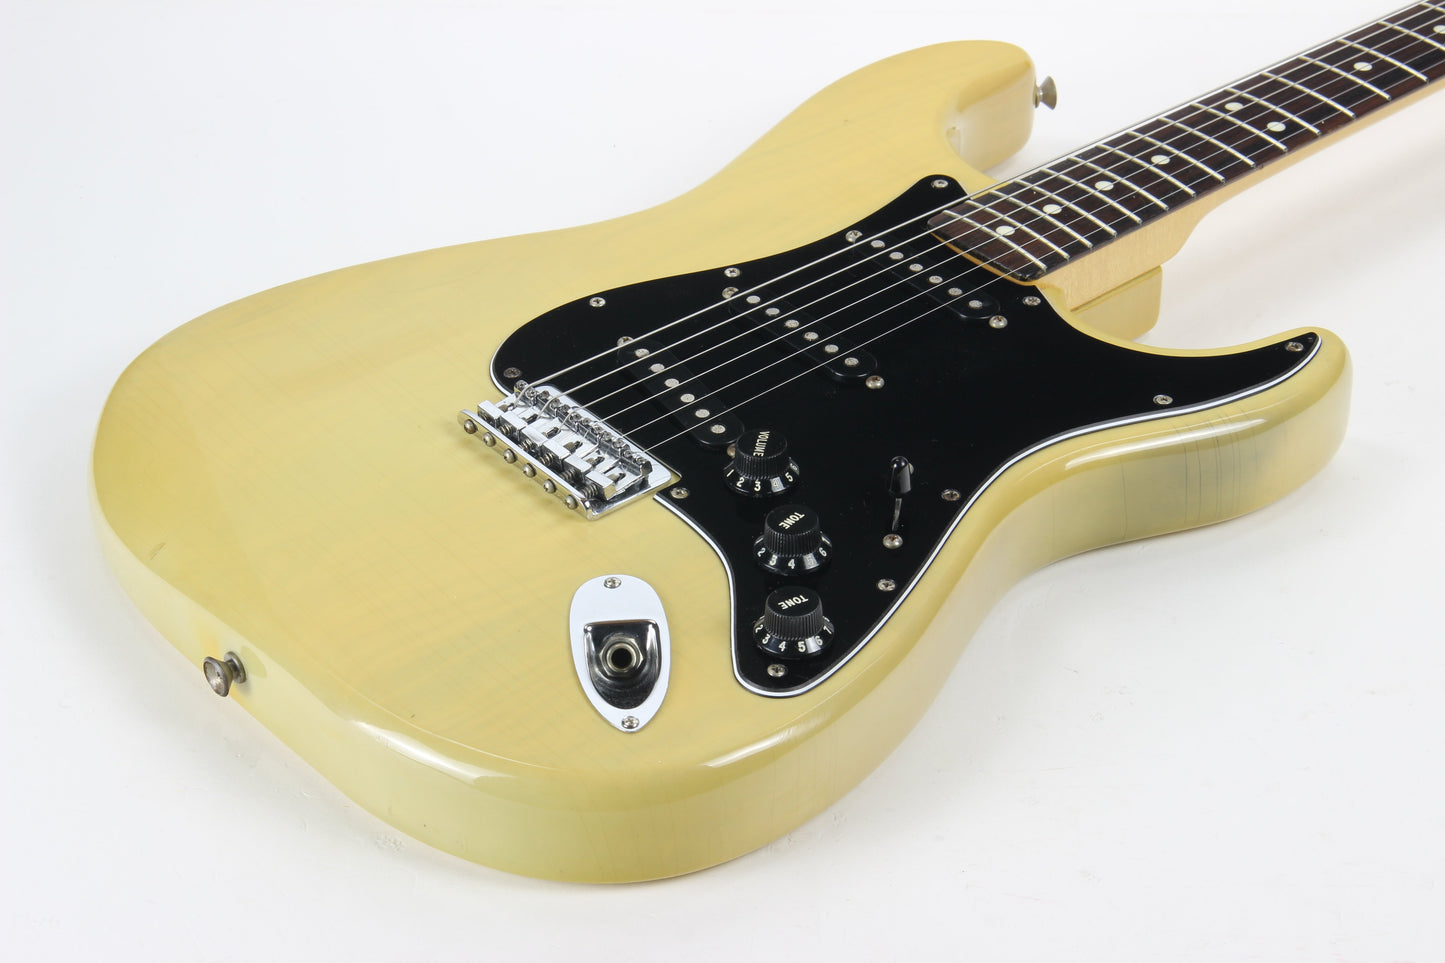 1979 Fender Stratocaster Blonde Ash Hardtail - Original See Through Finish! 1980 Vintage!